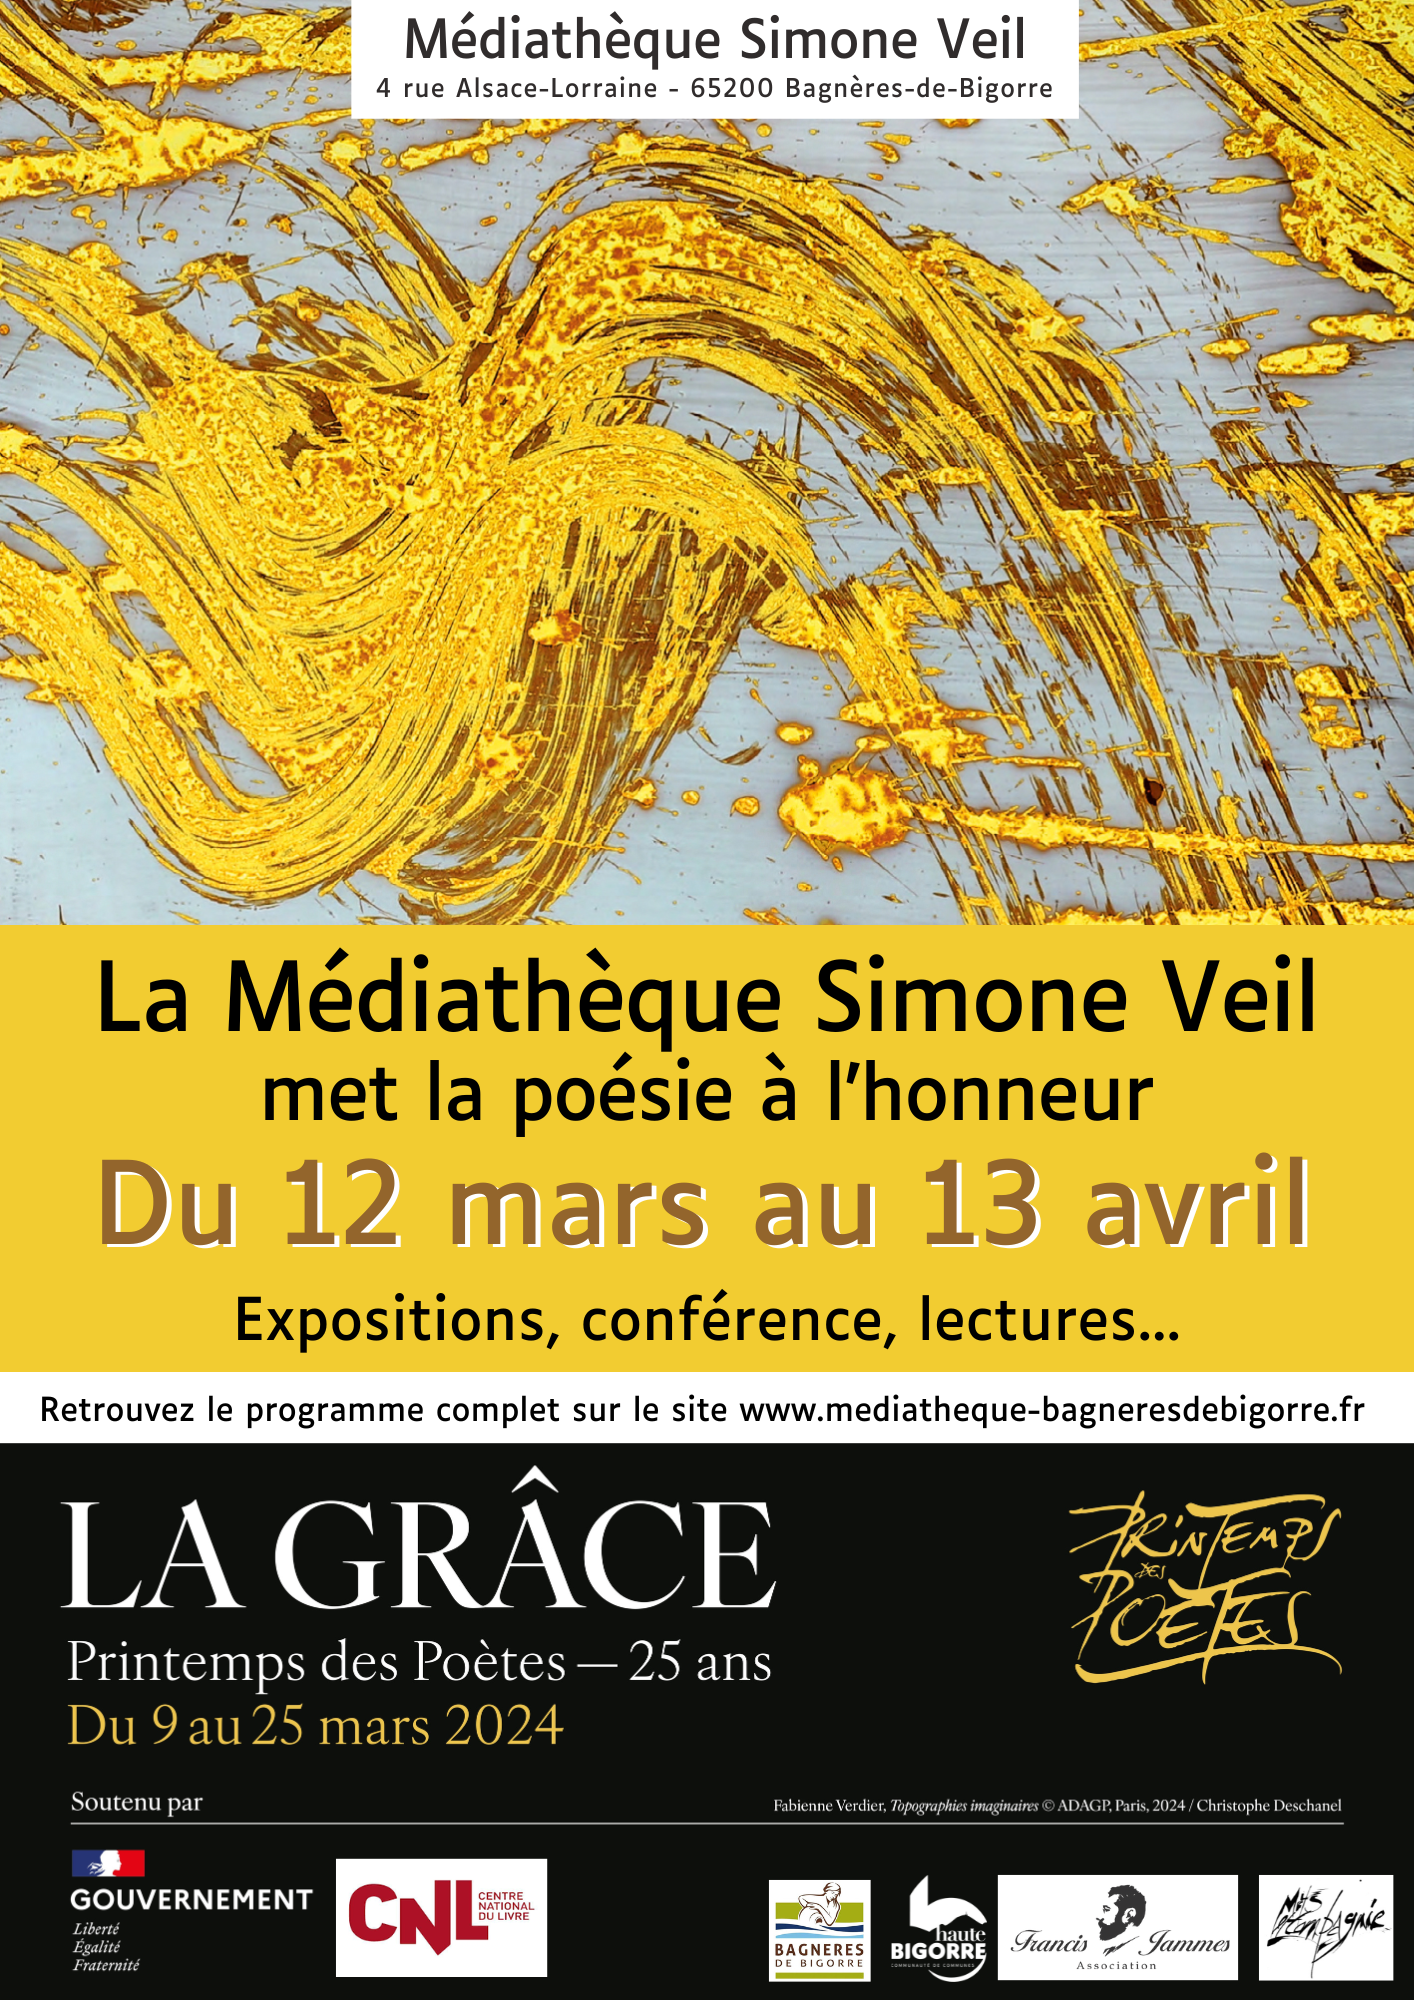 conference-de-jacques-le-gall-mediatheque-simone-veil